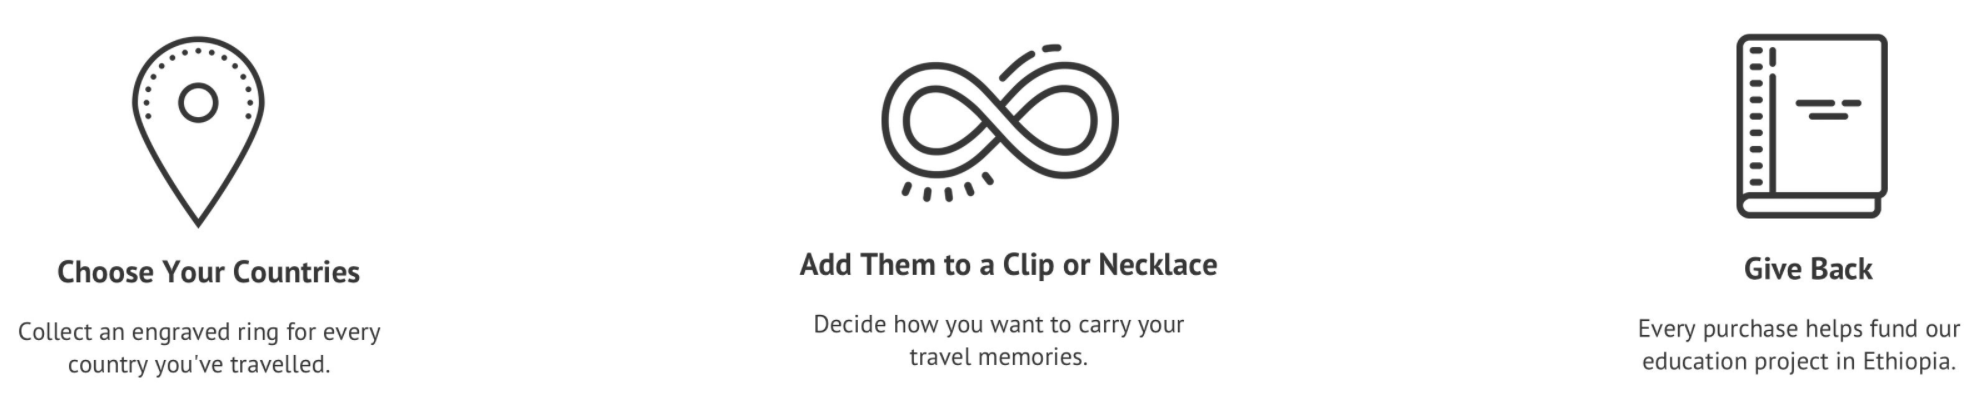 Screenshot showing copy for a travel memoir product